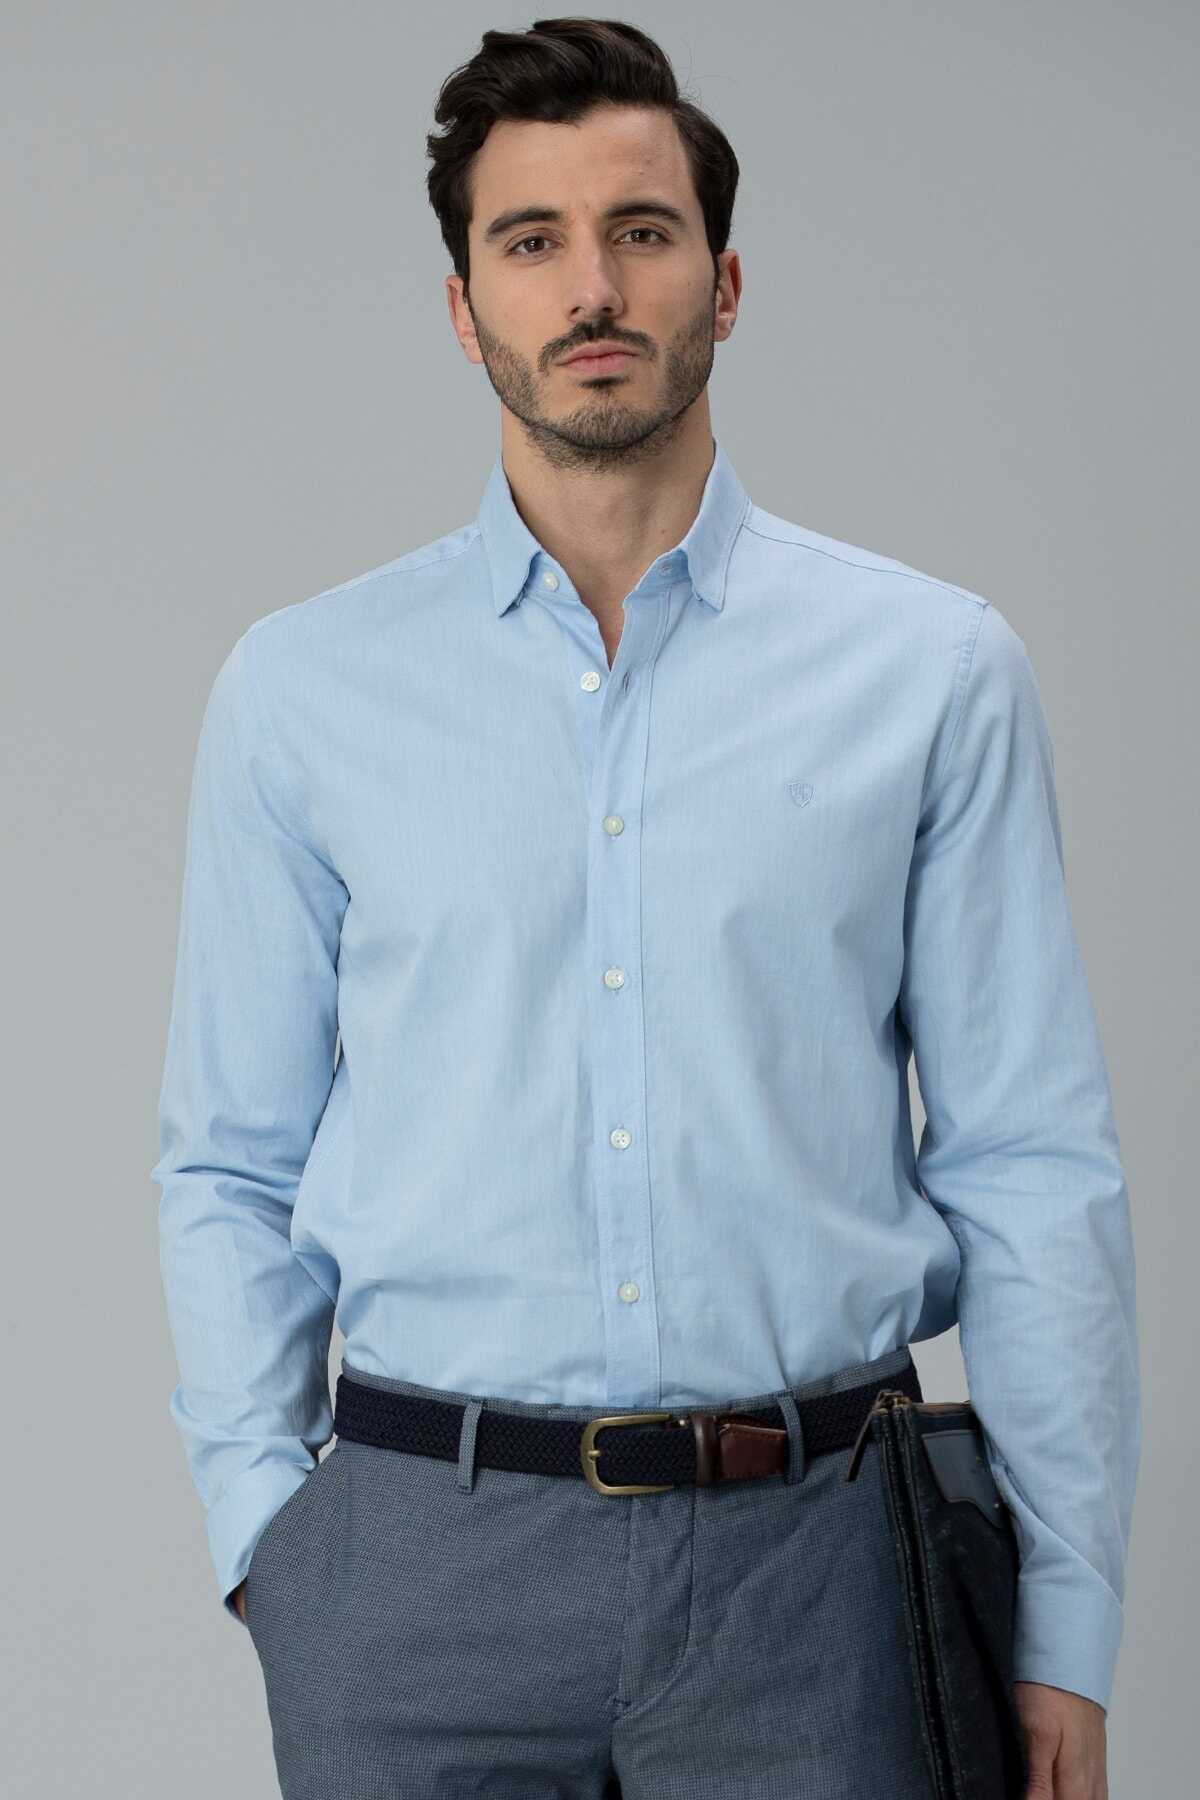 پیراهن کلاسیک مردانه آبی روشن برند Lufian 